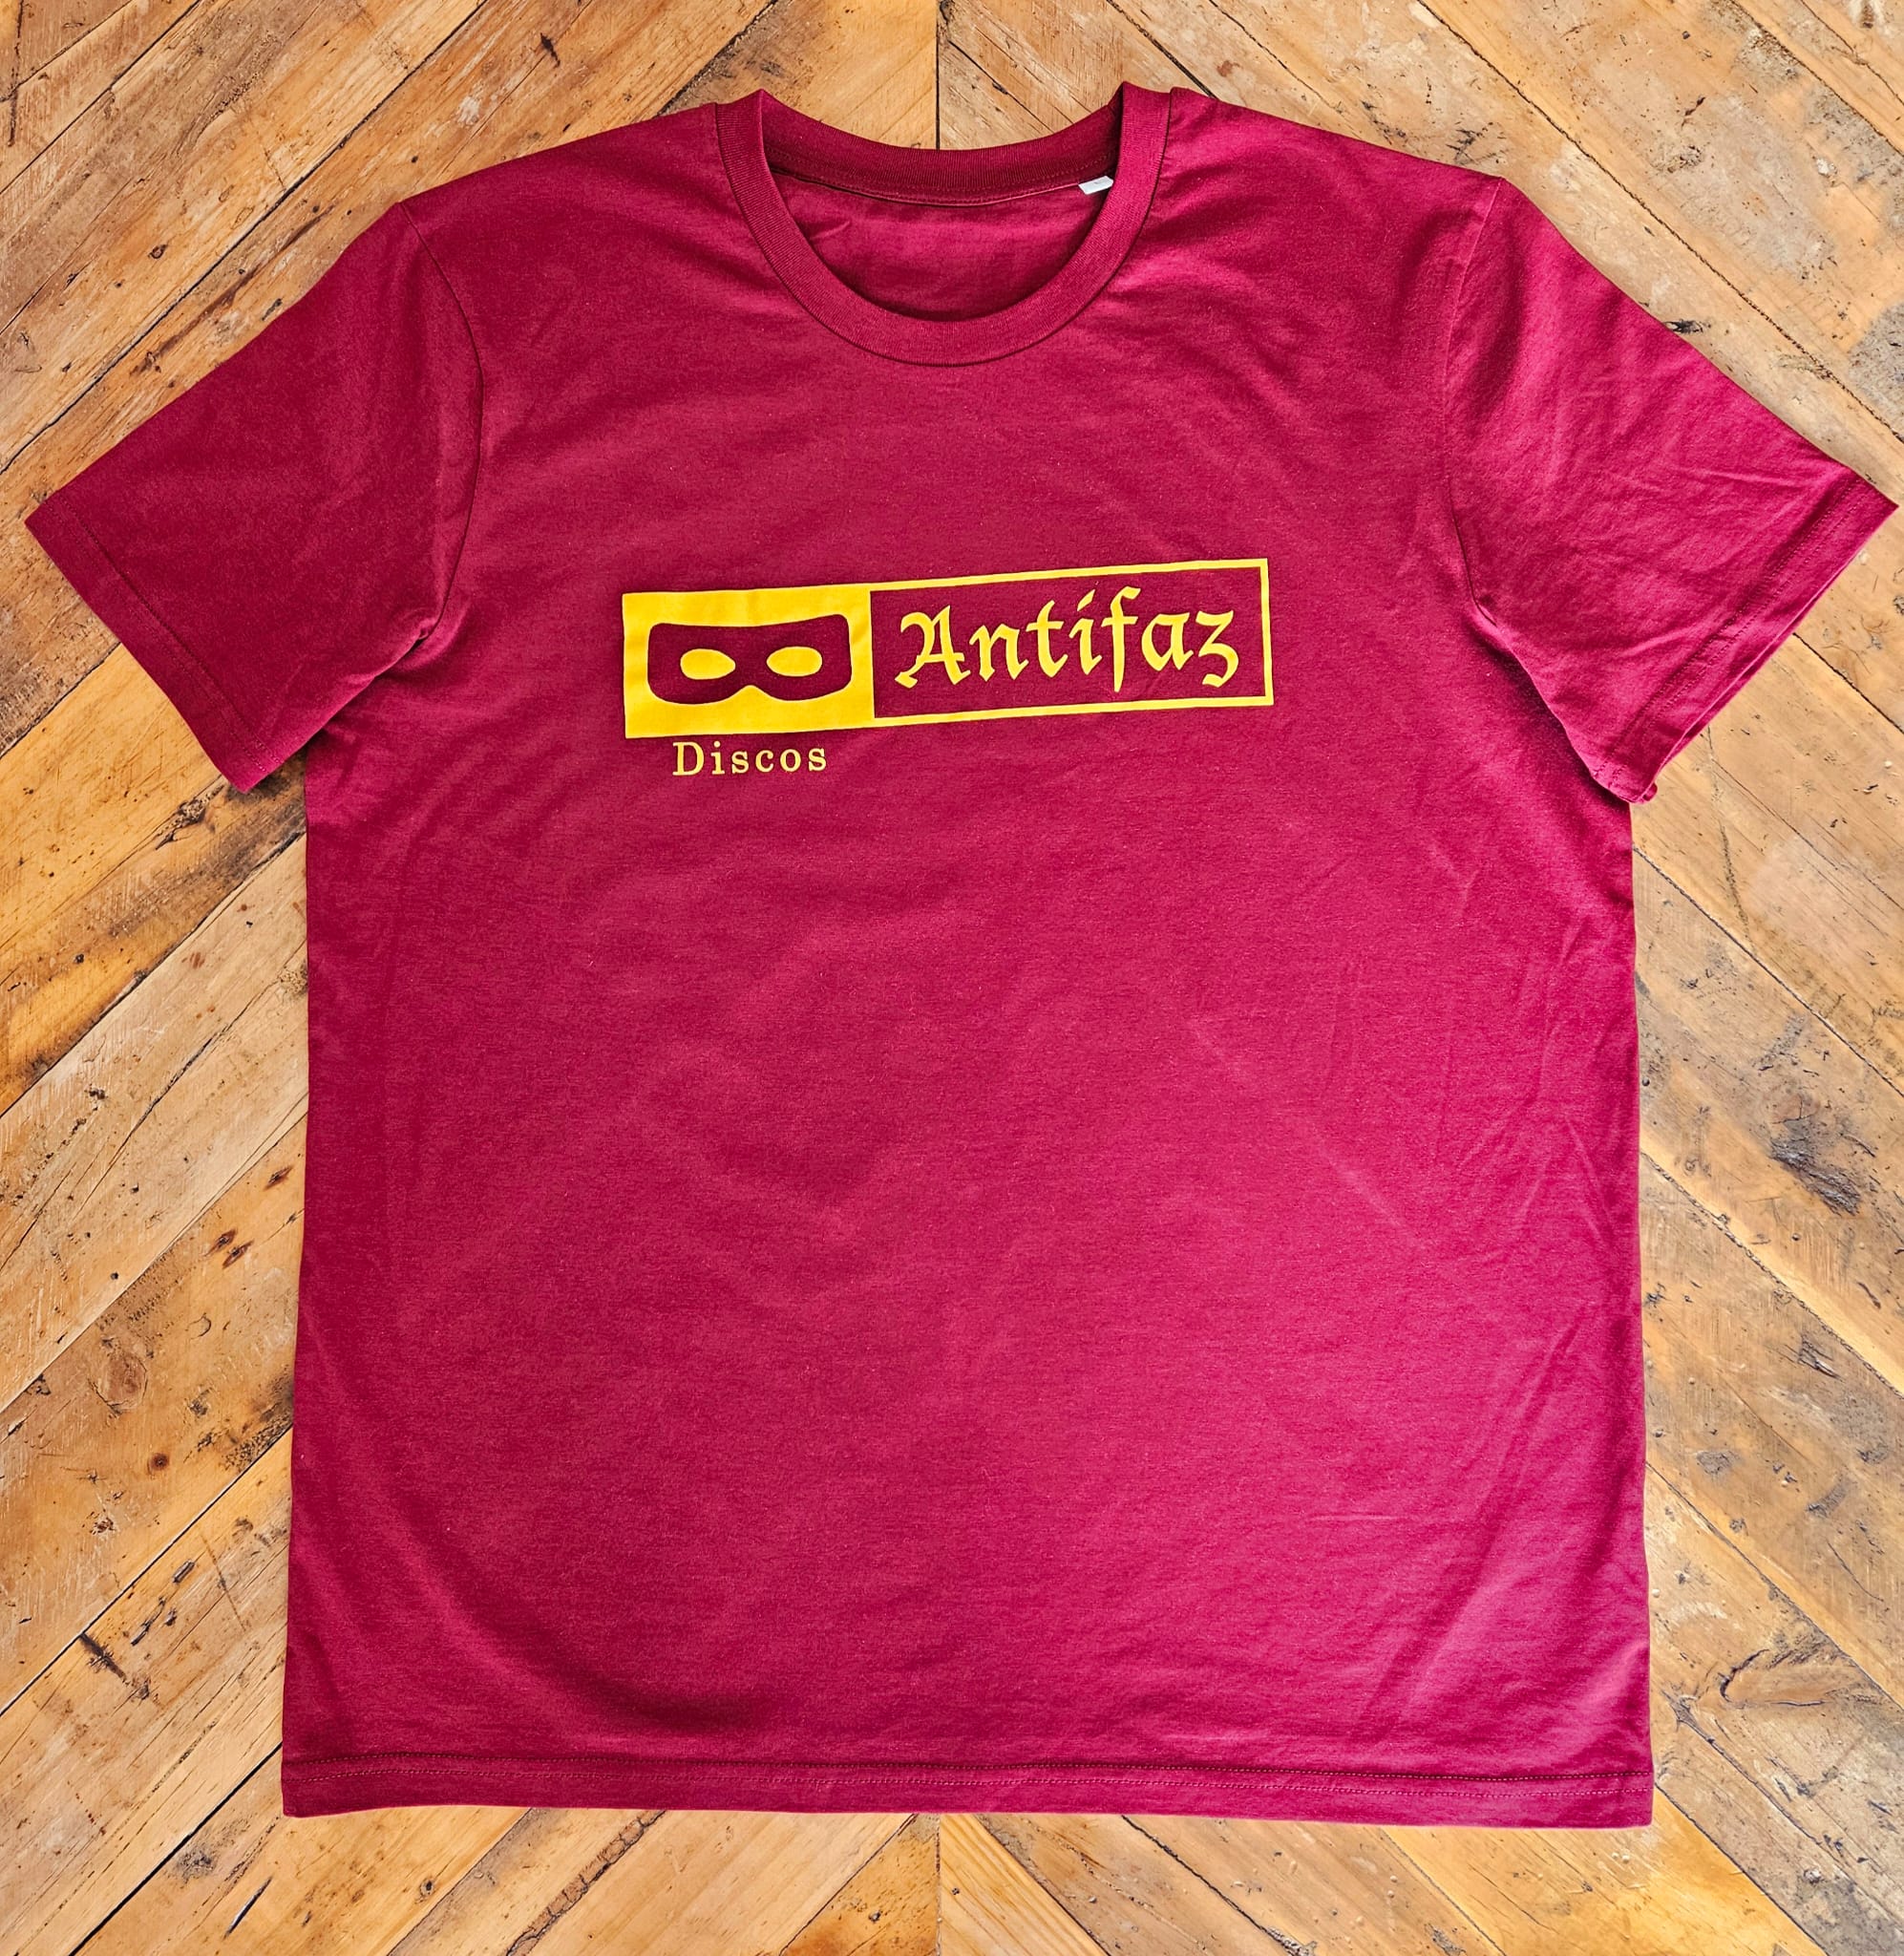 Discos Antifaz T (Burgundy)